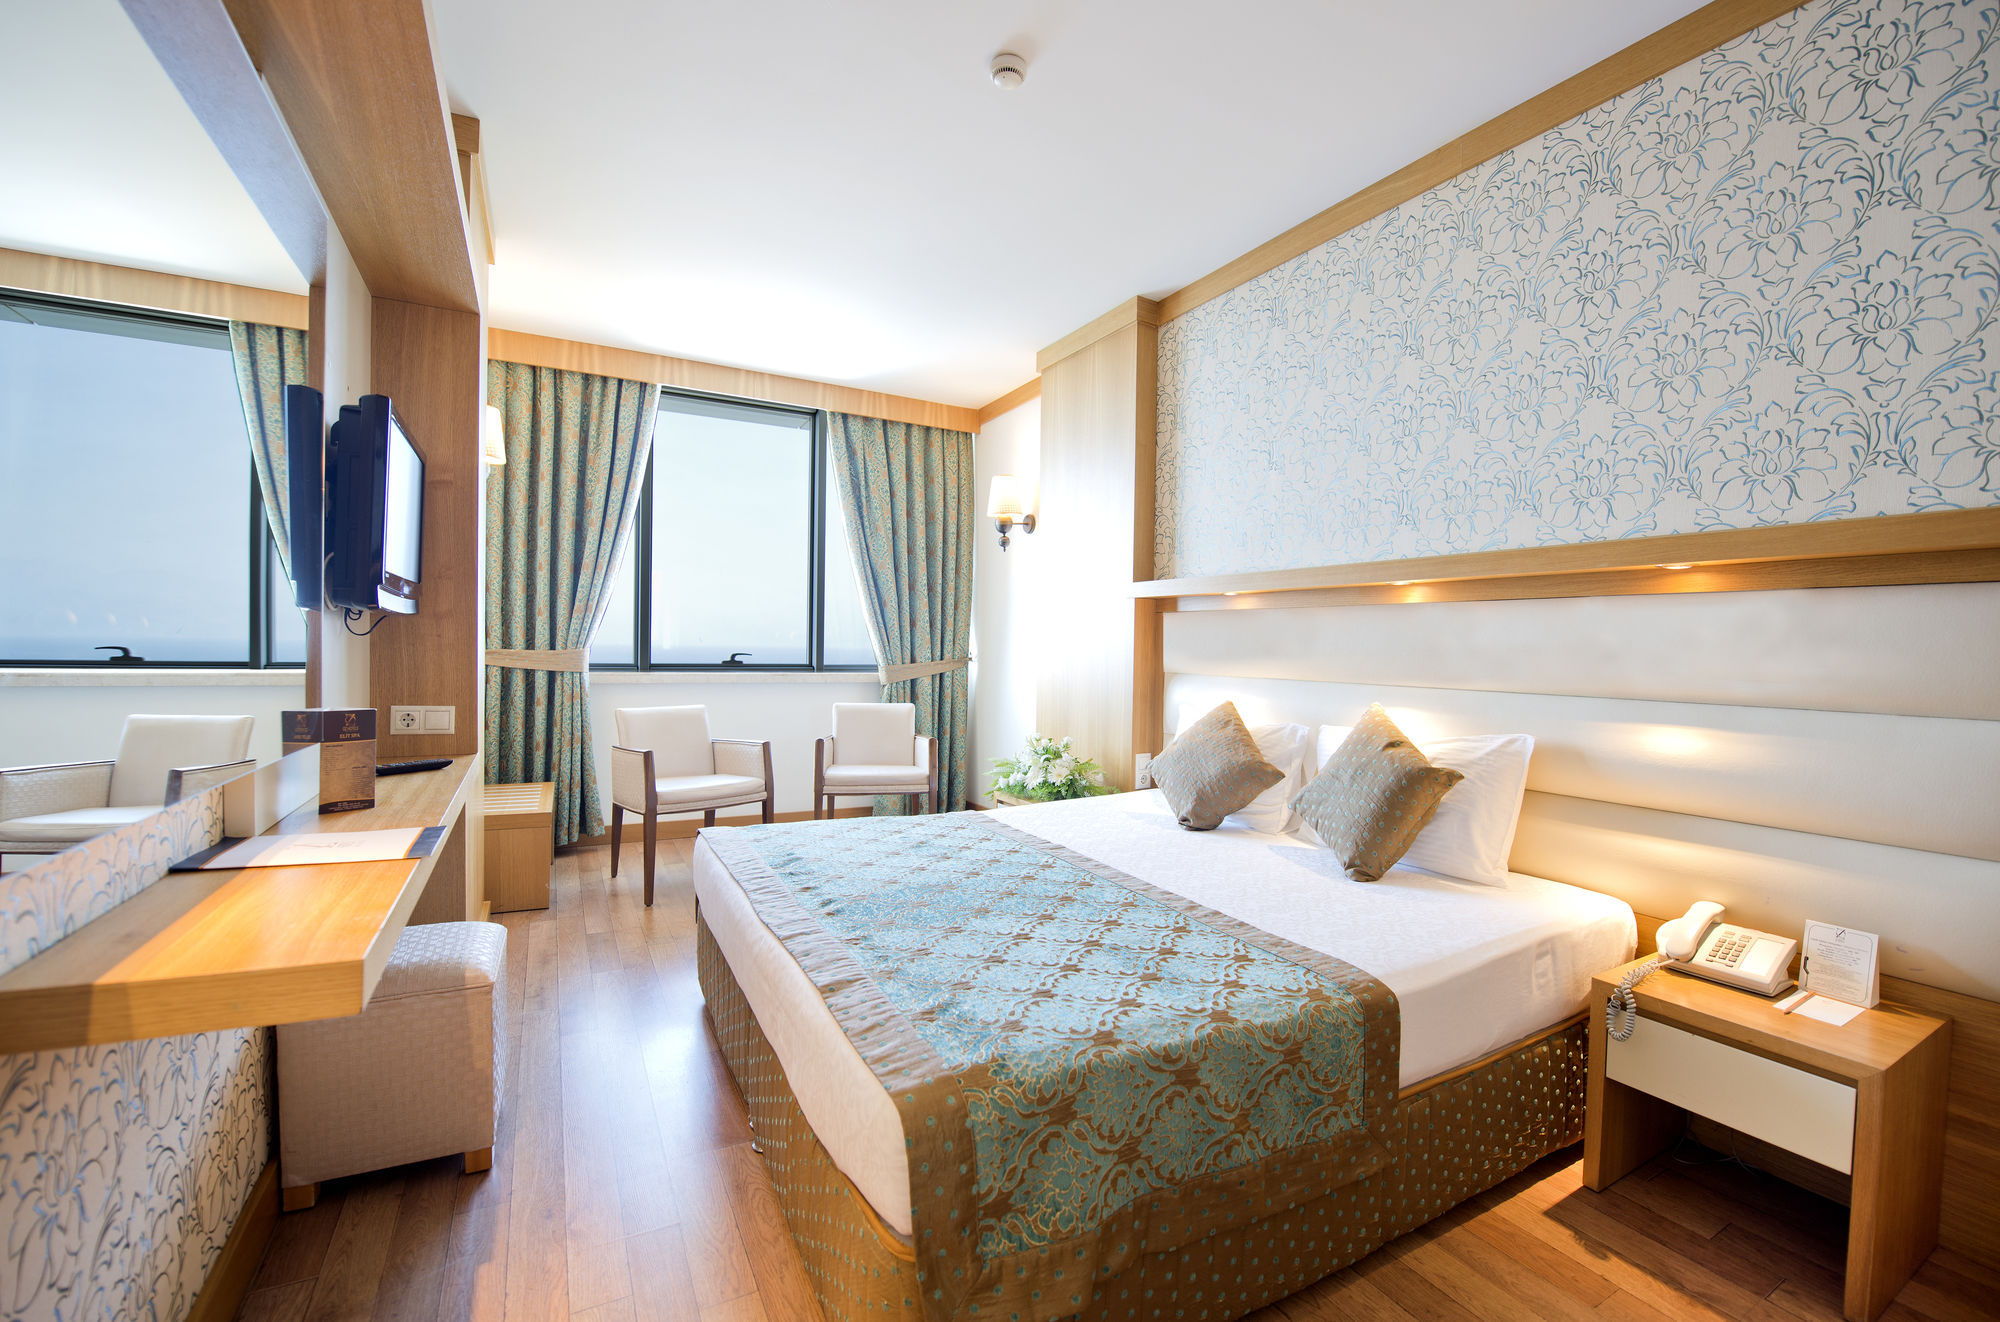 Antalya Hotel Resort and Spa